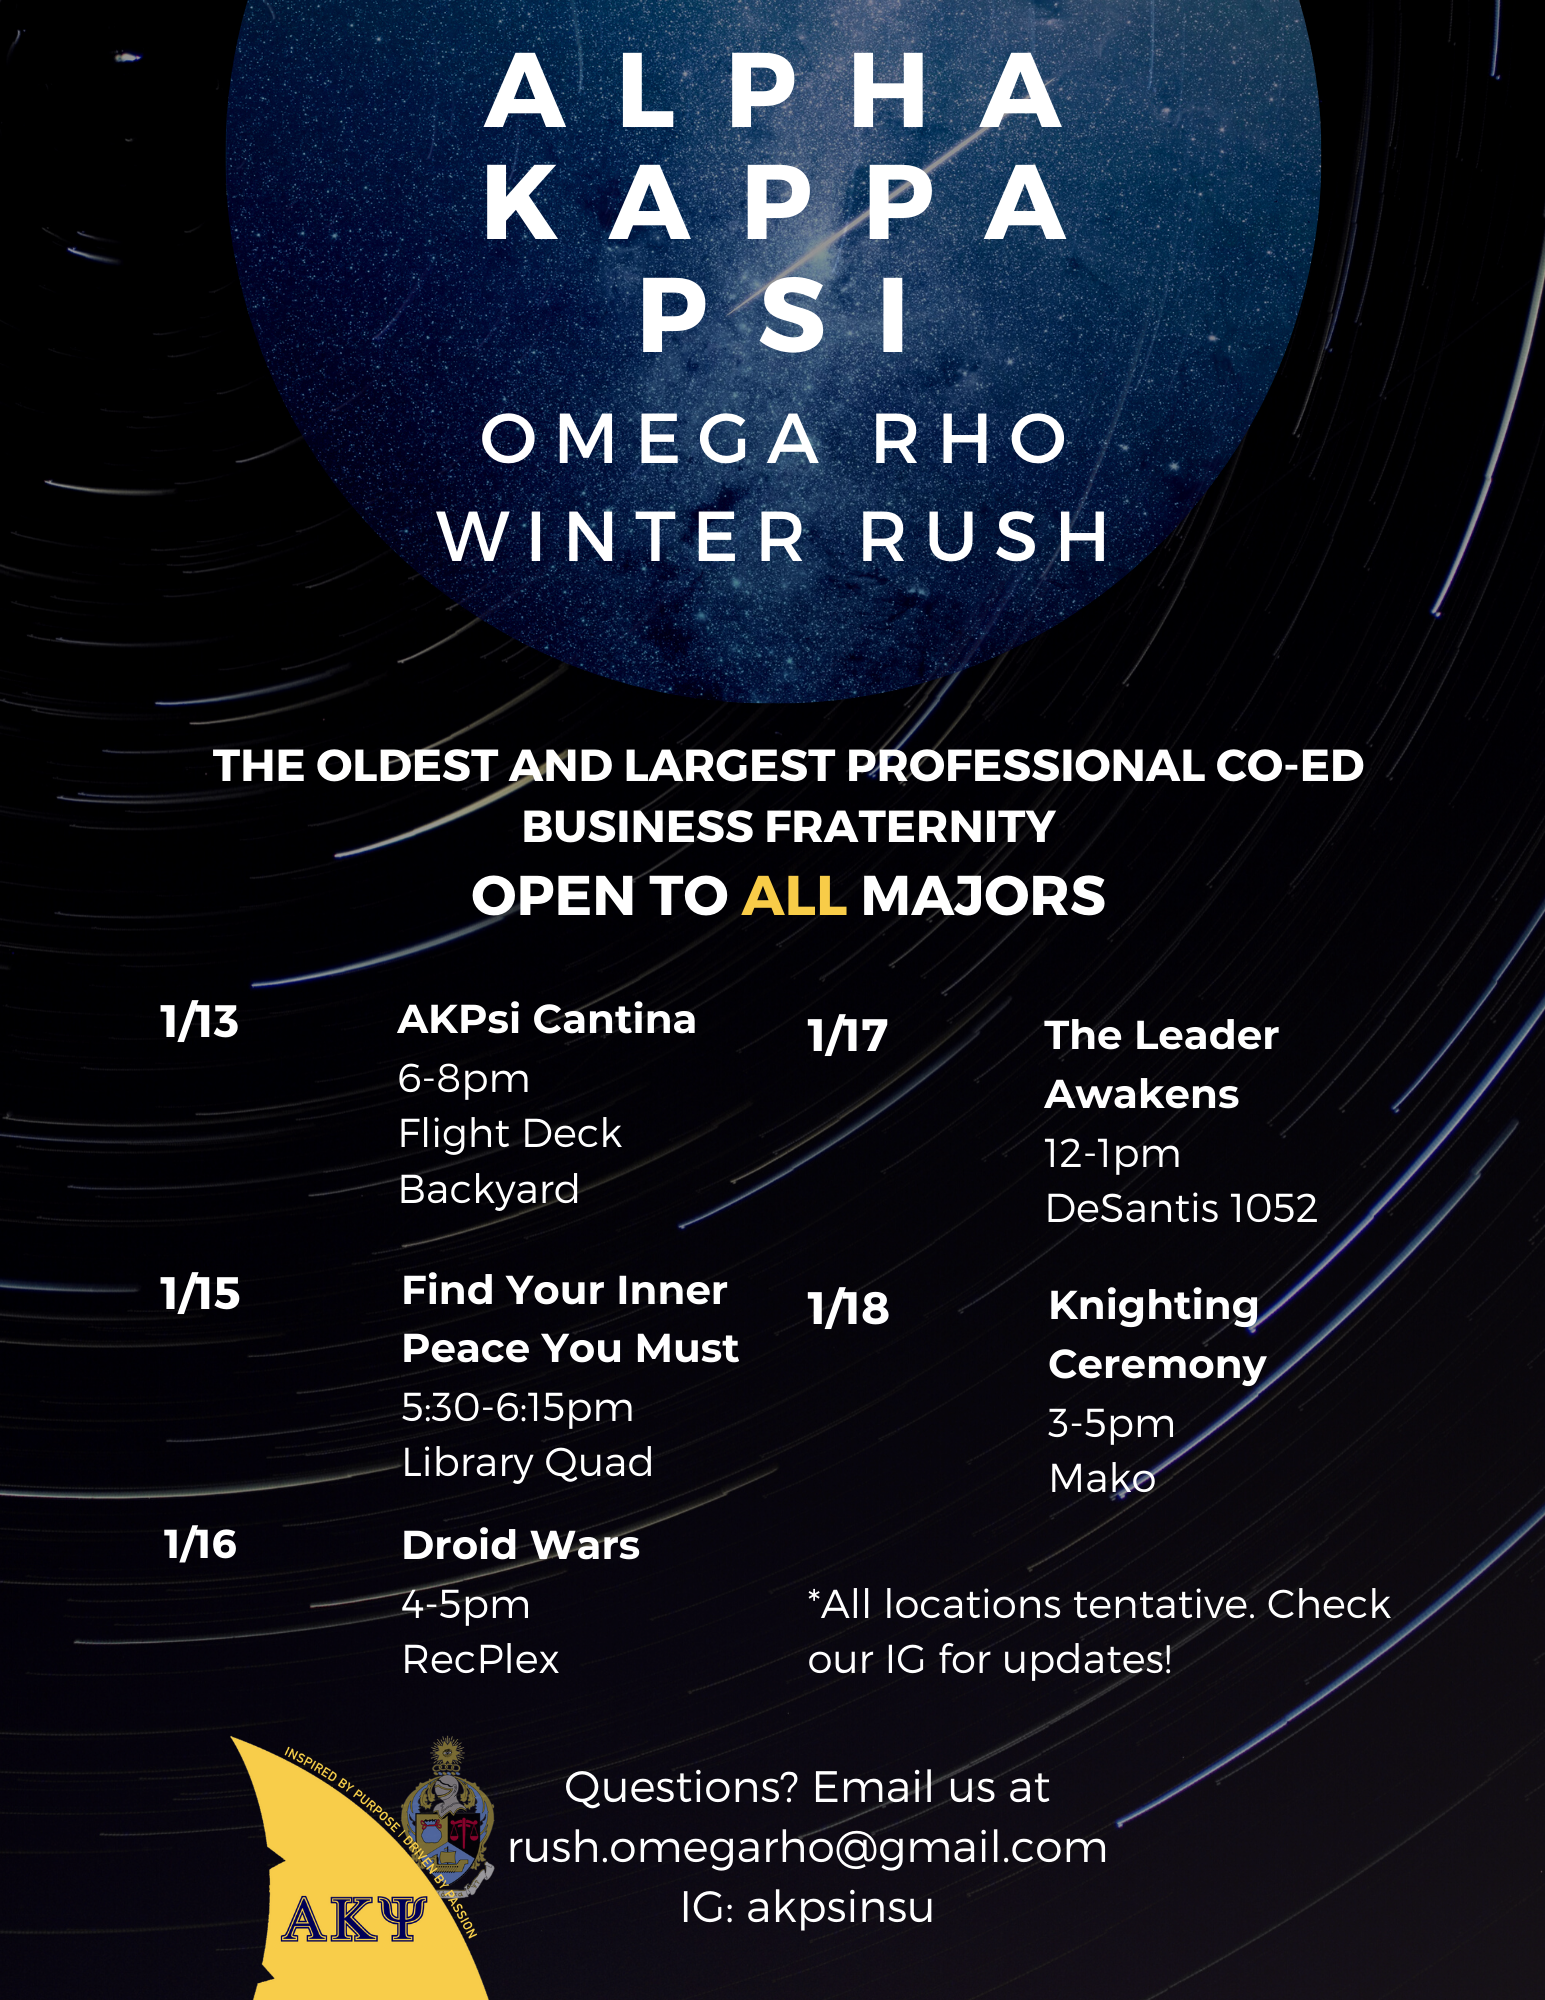 Rush Week Winter 2020 Alpha Kappa Psi - Omega